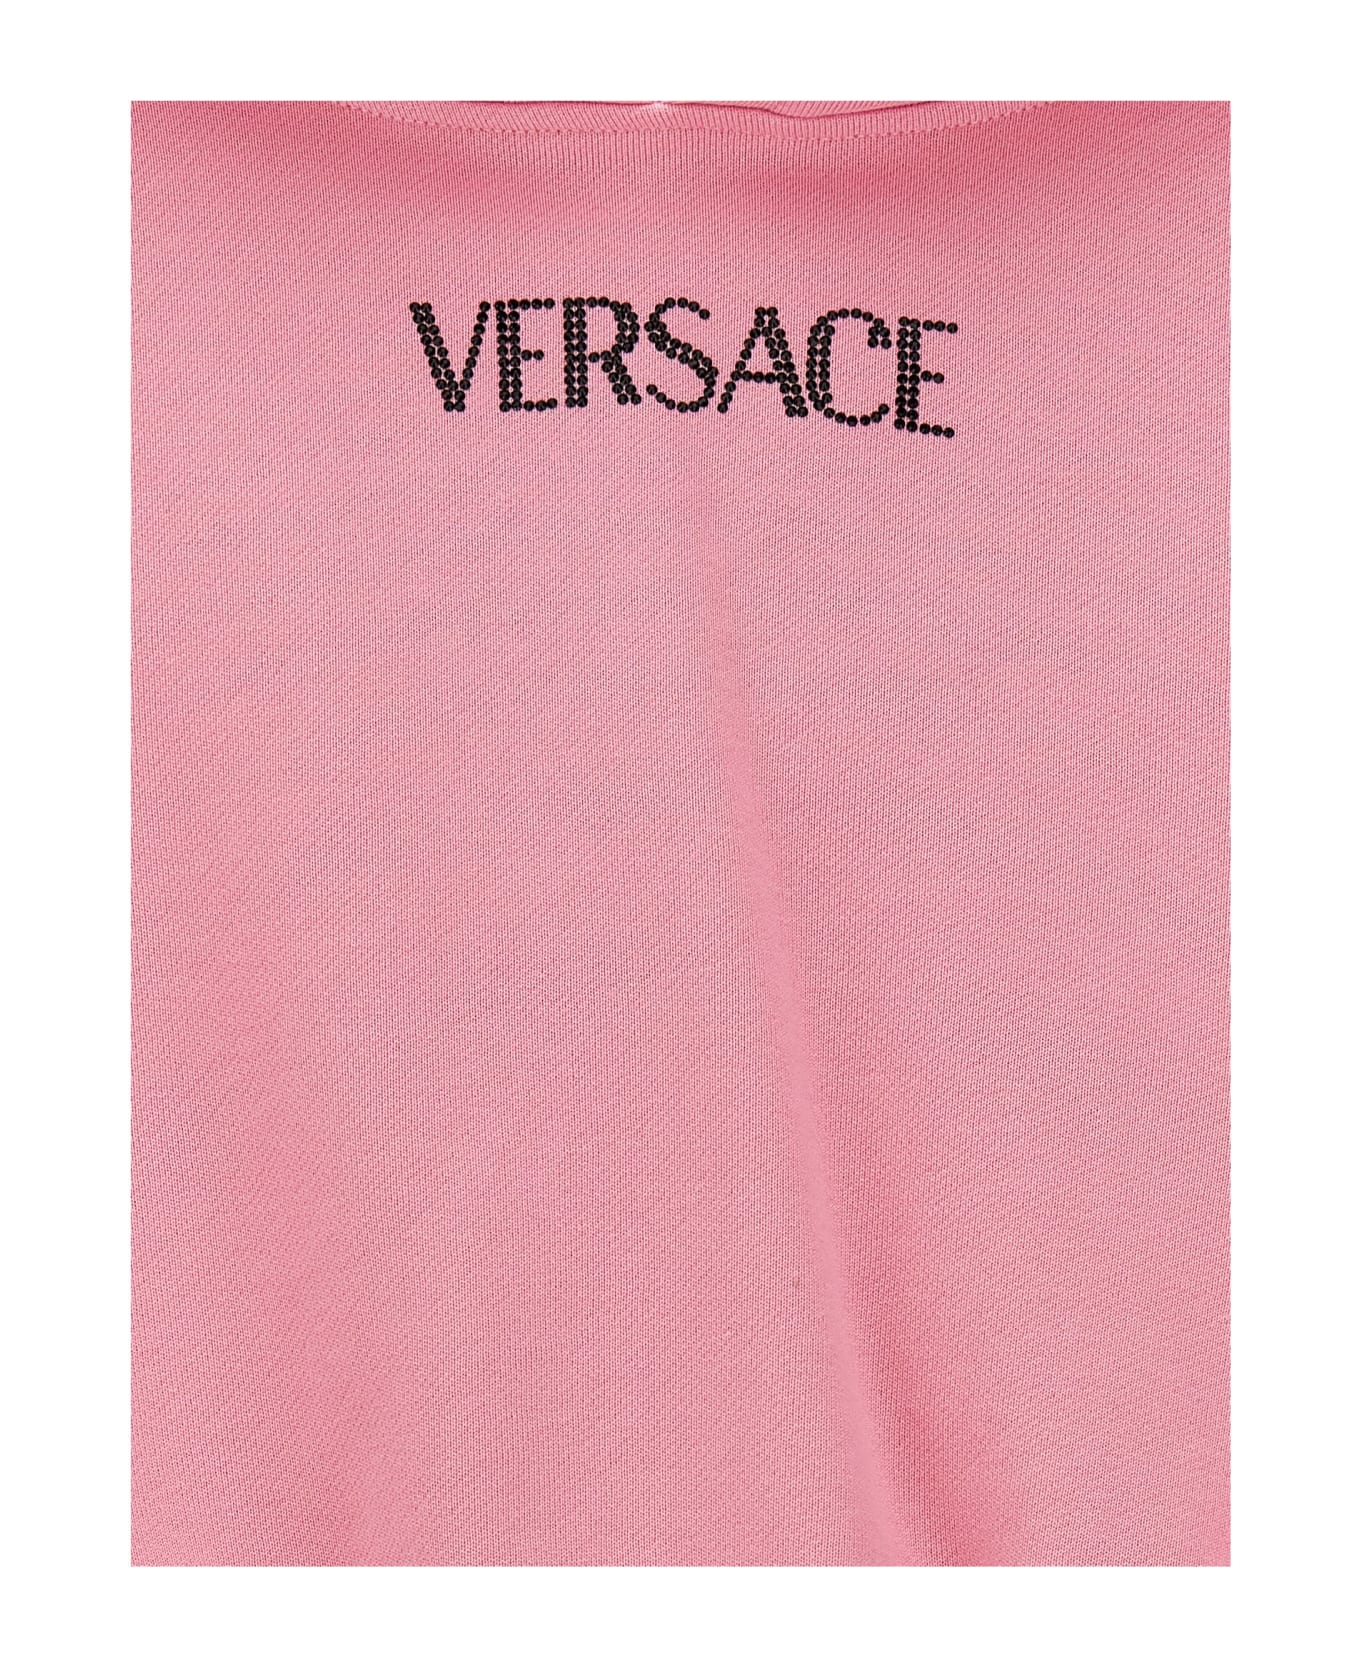 Versace Logo Hoodie - Rosa ニットウェア＆スウェットシャツ